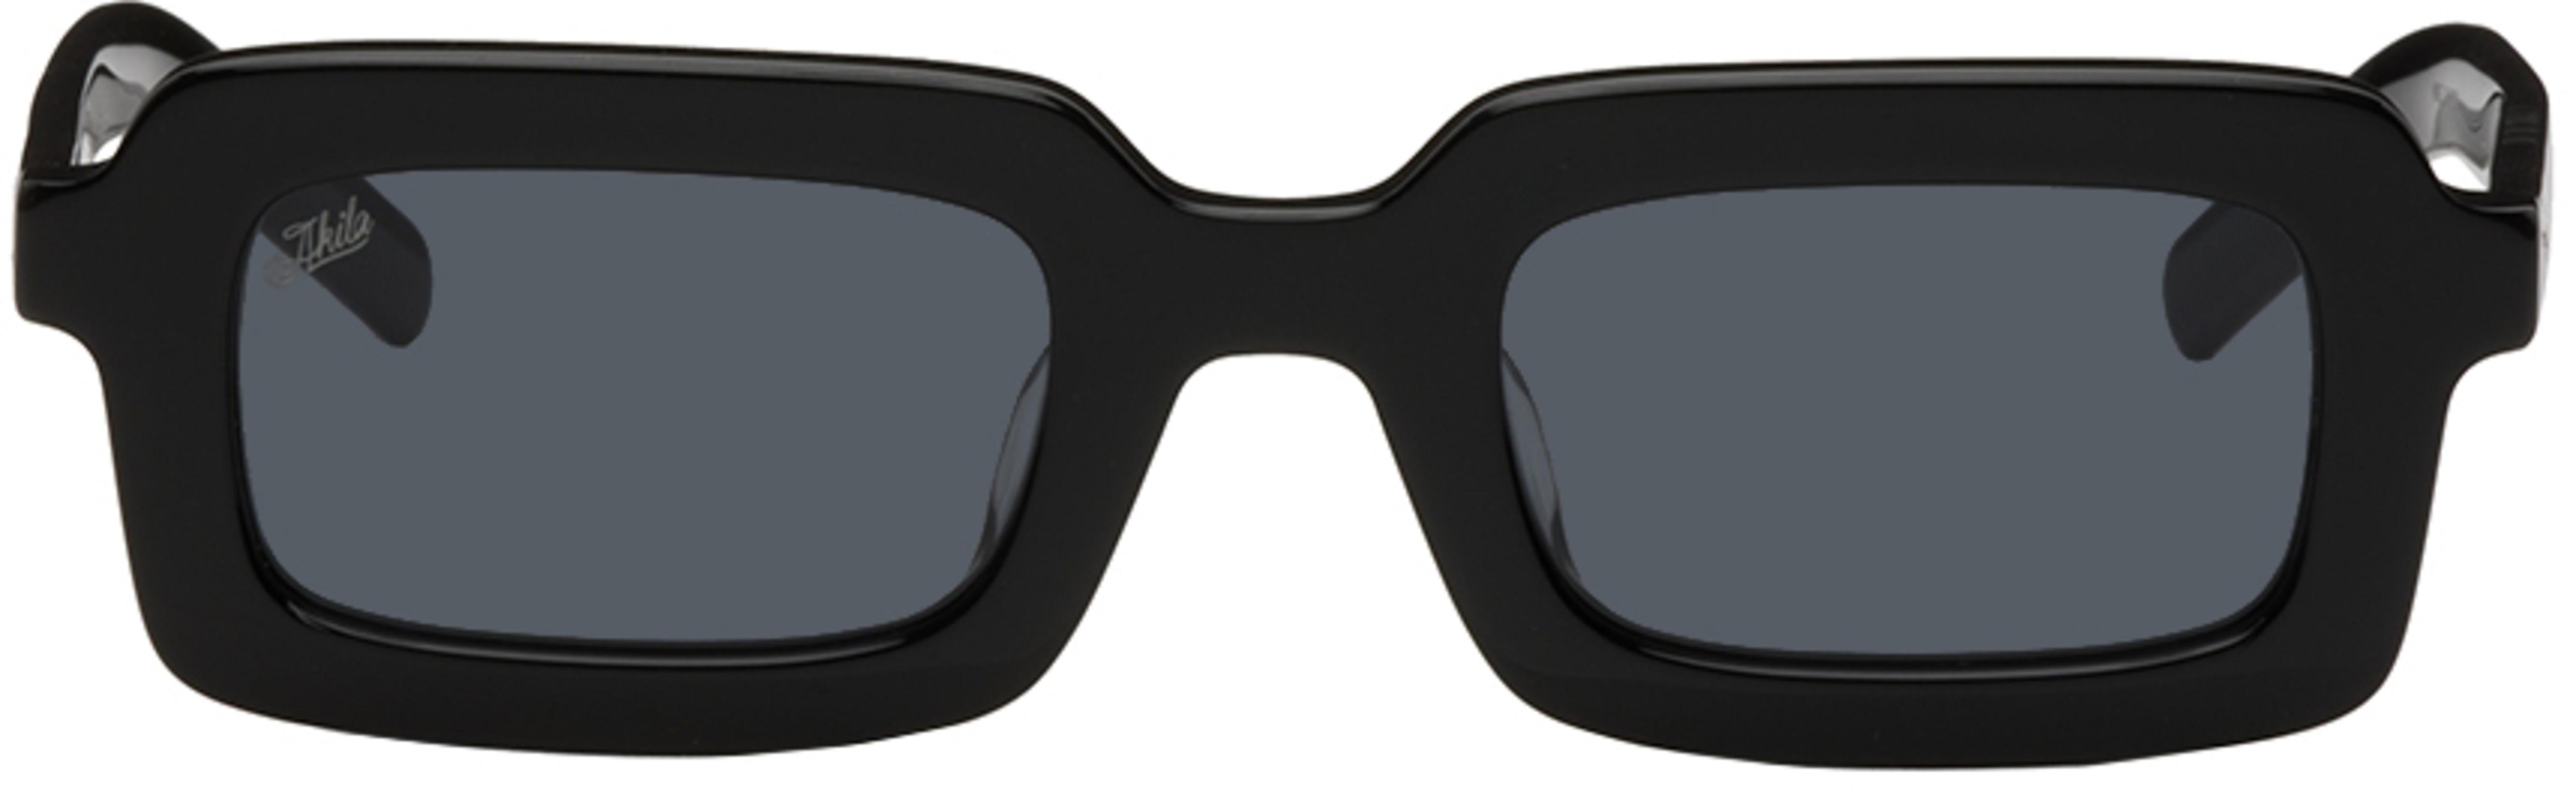 Black Eos Sunglasses by AKILA